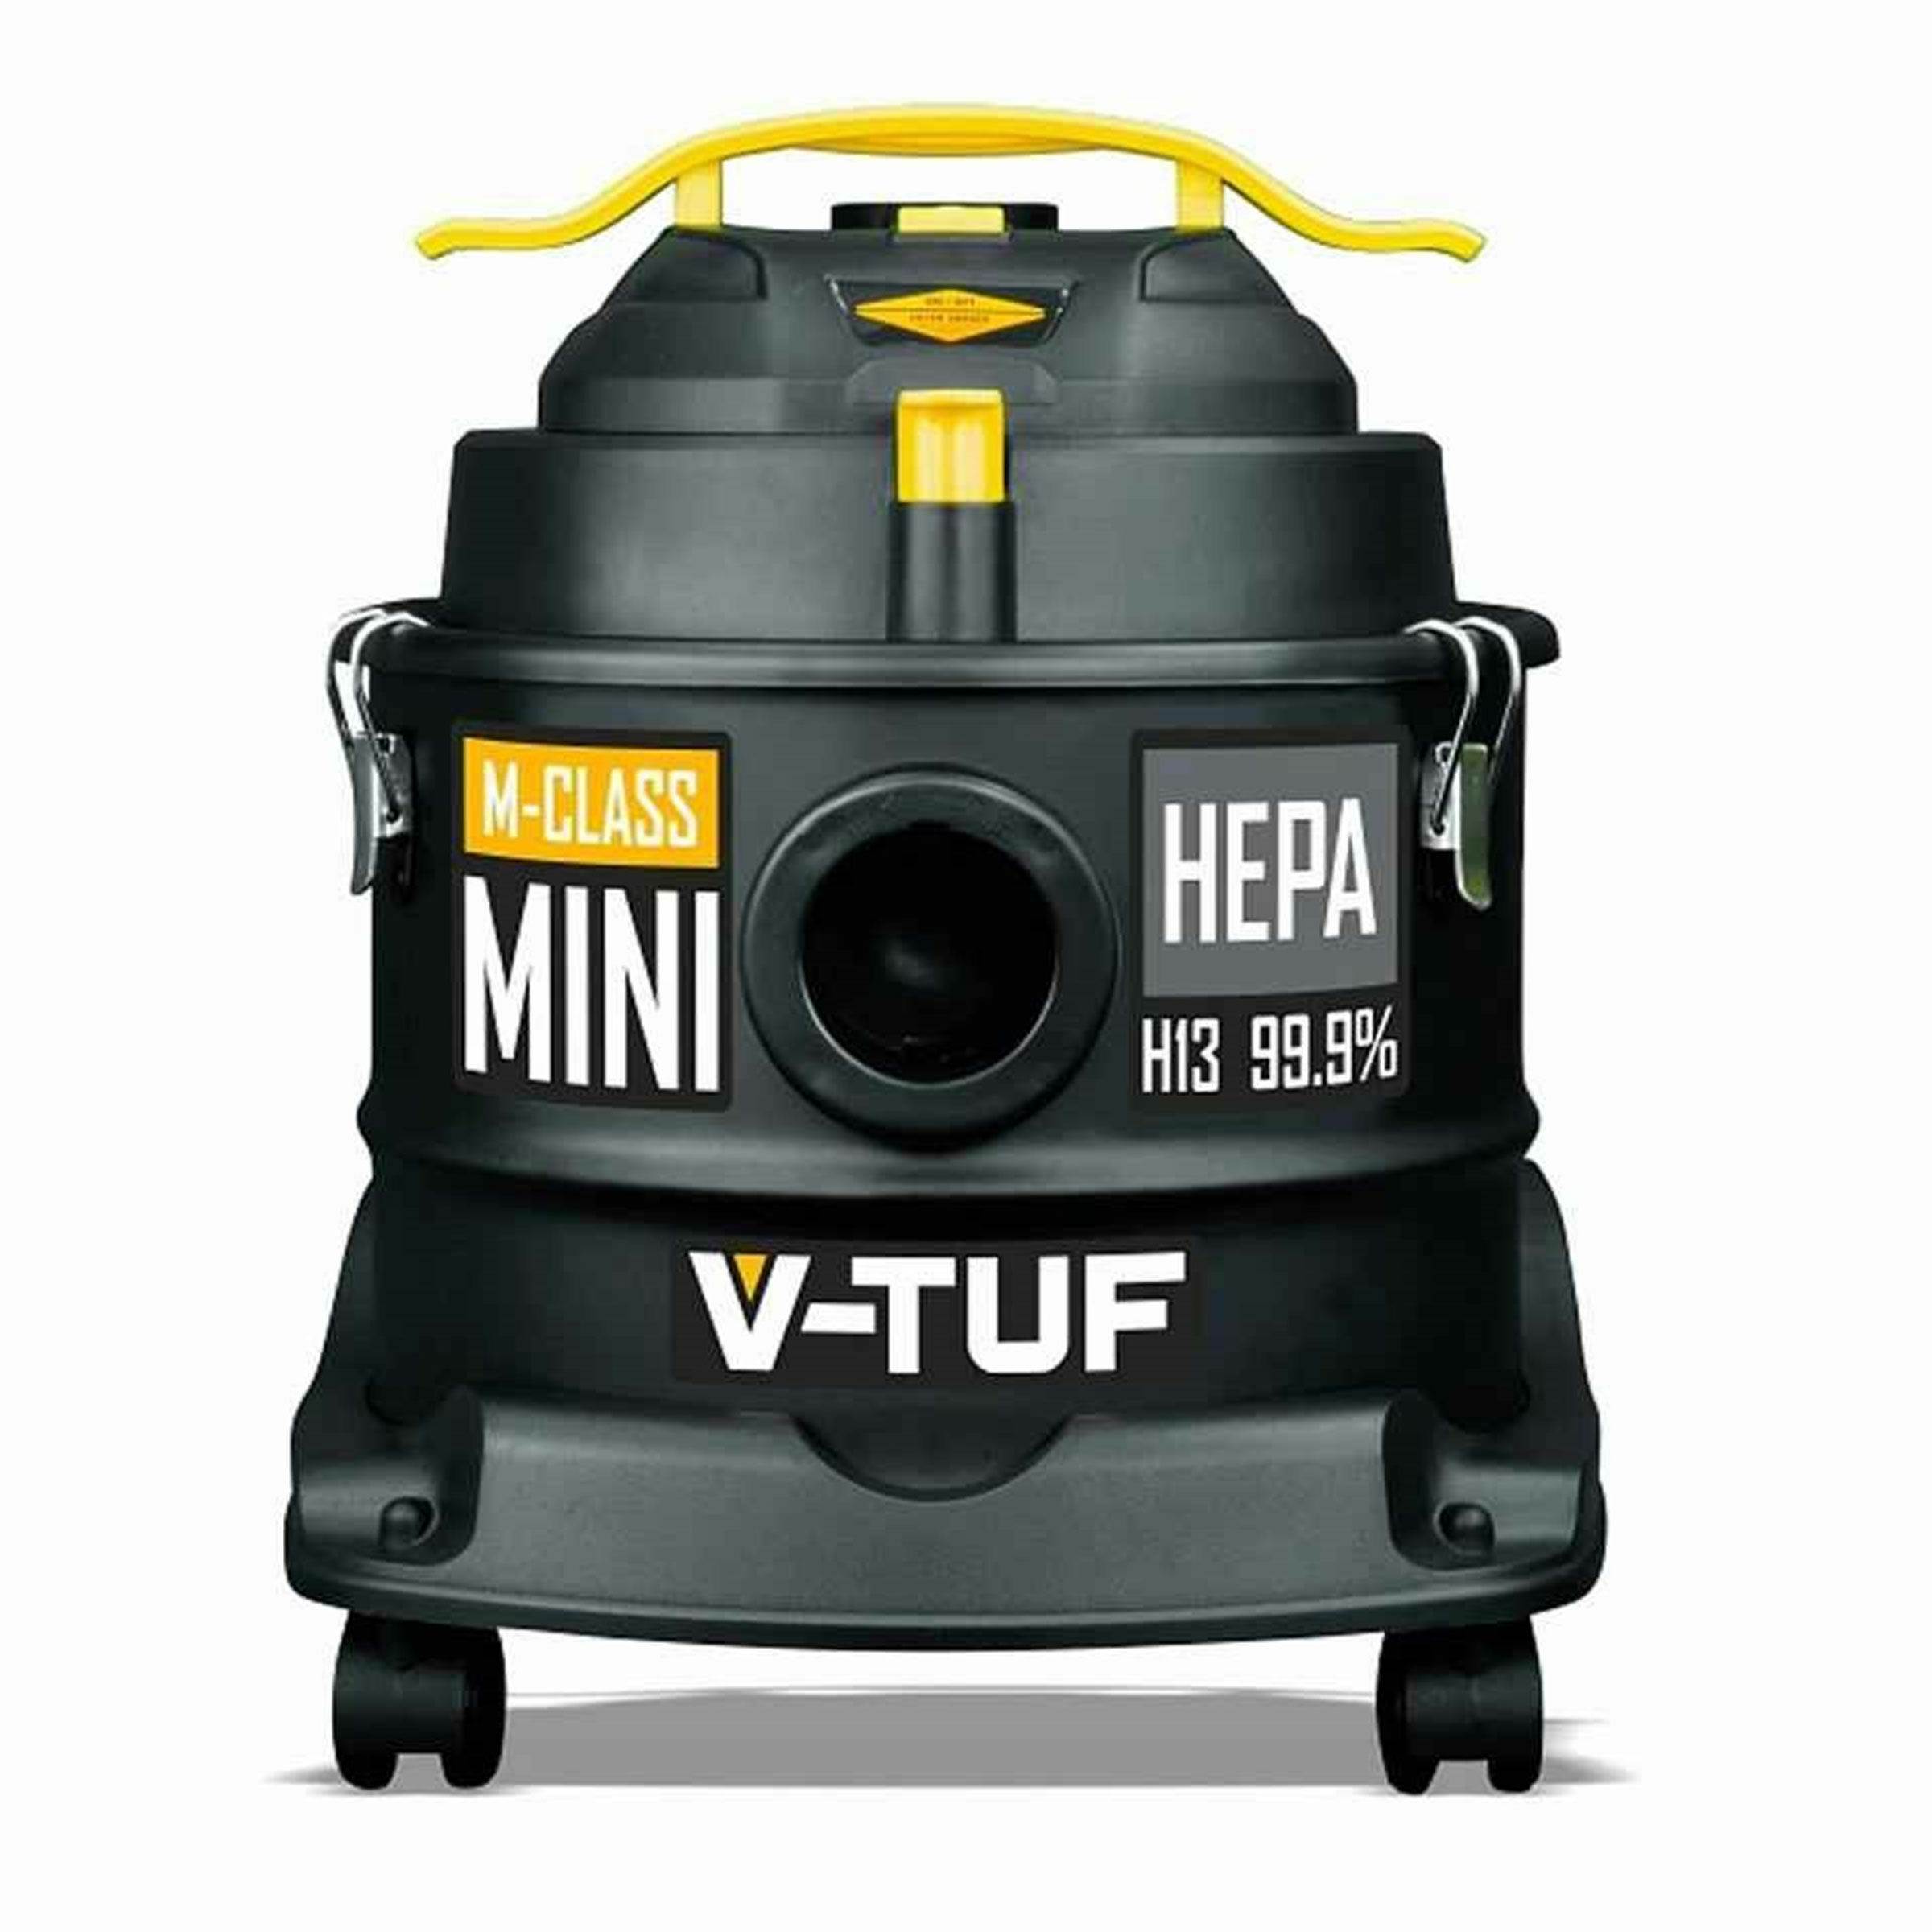 V-Tuf Dust Extractors